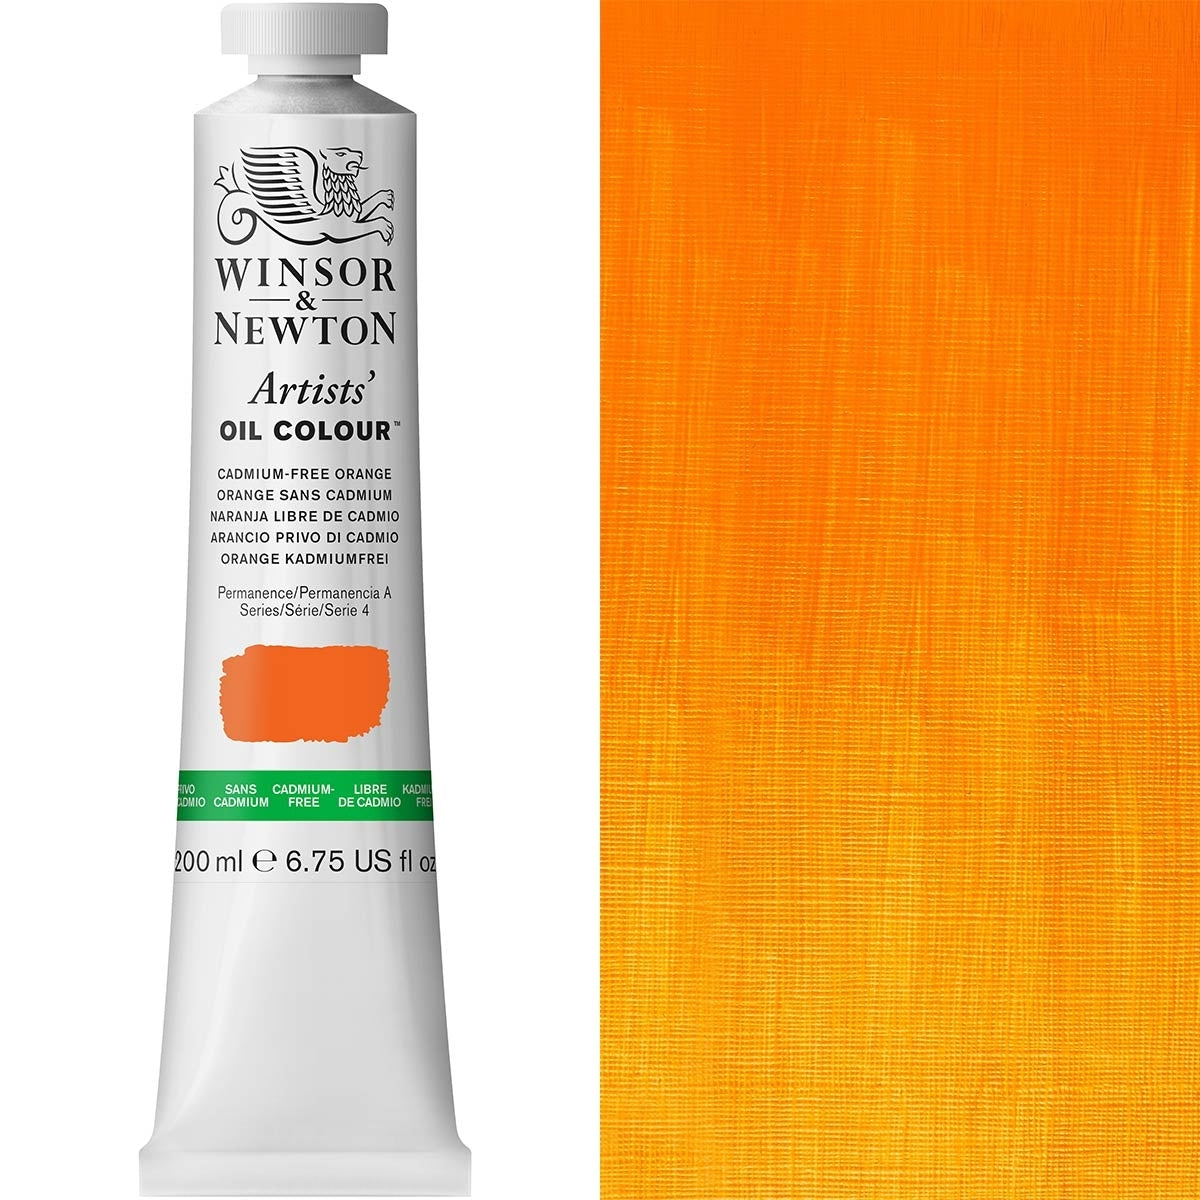 Winsor and Newton - Artists' Oil Colour - 200ml - Cad Free Orange